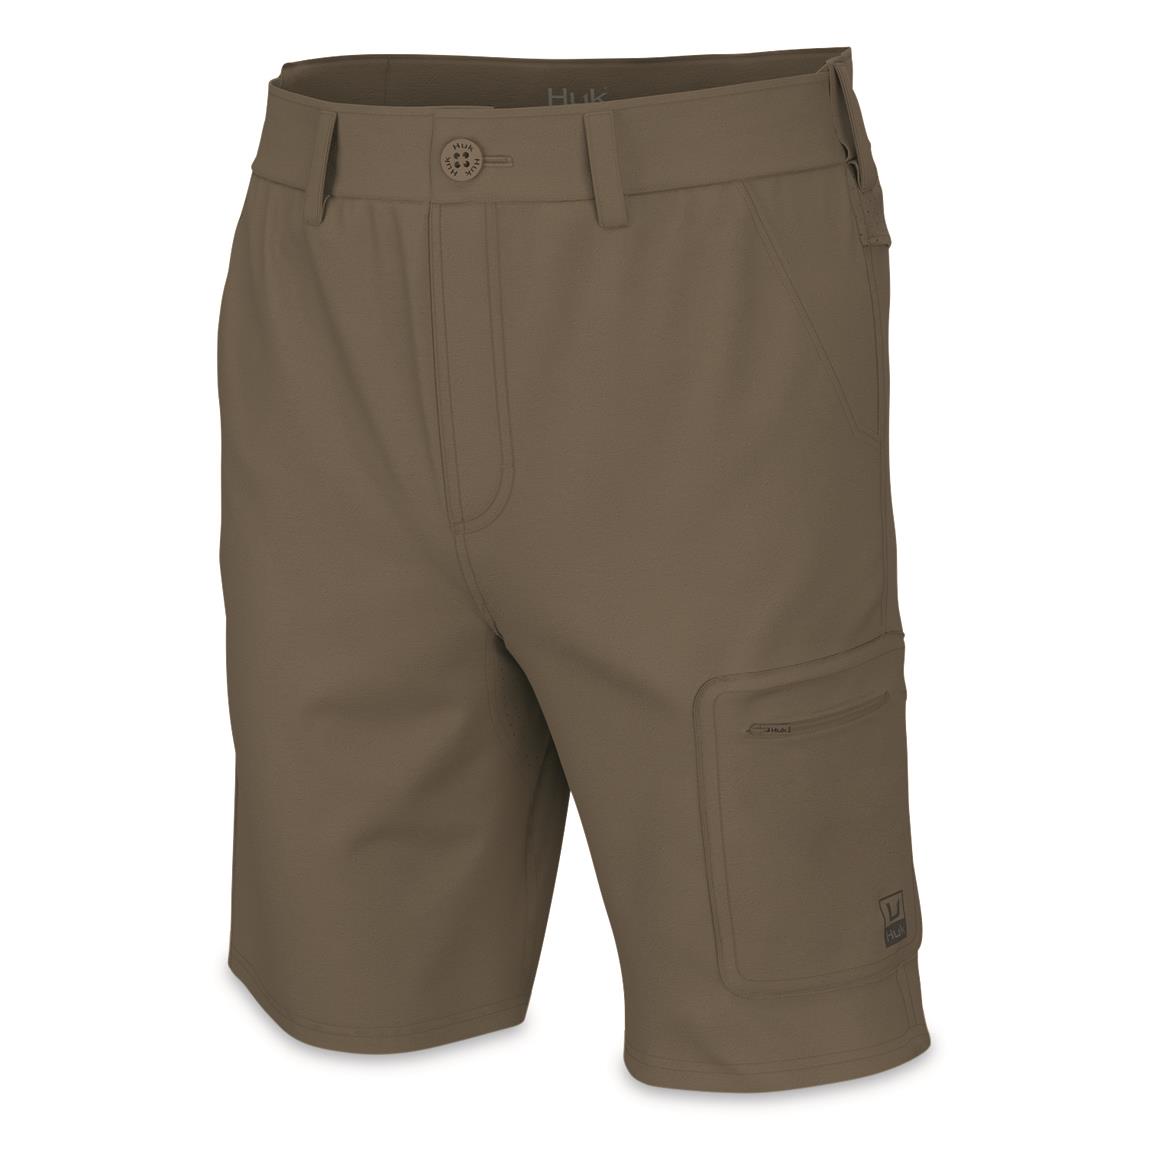 Huk Men's Next Level Shorts - 730109, Shorts at Sportsman's Guide